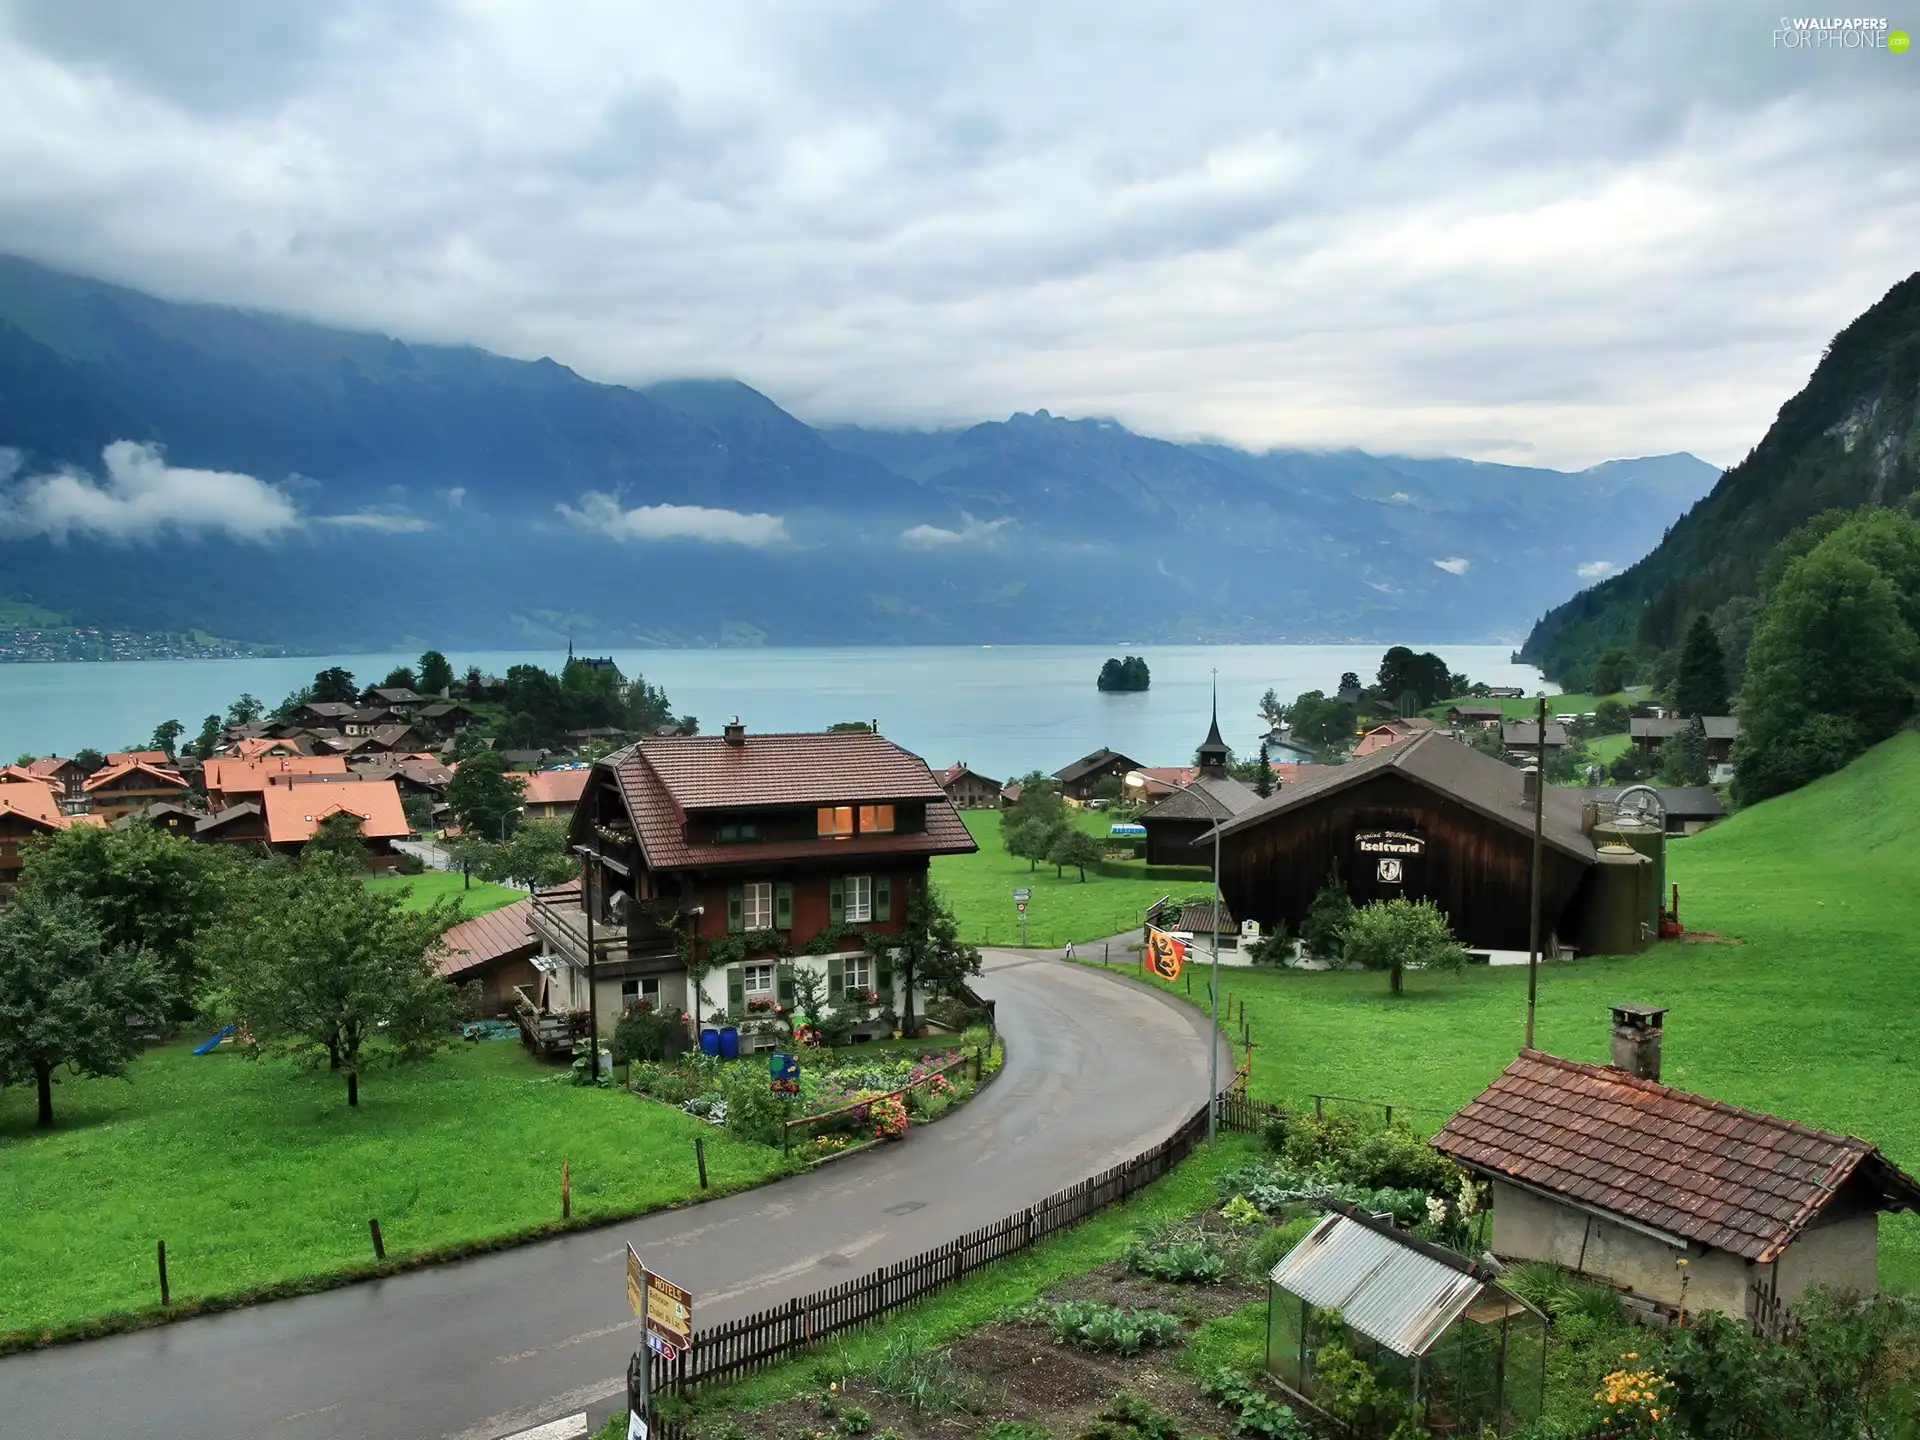 Way, Mountains, Switzerland, Houses